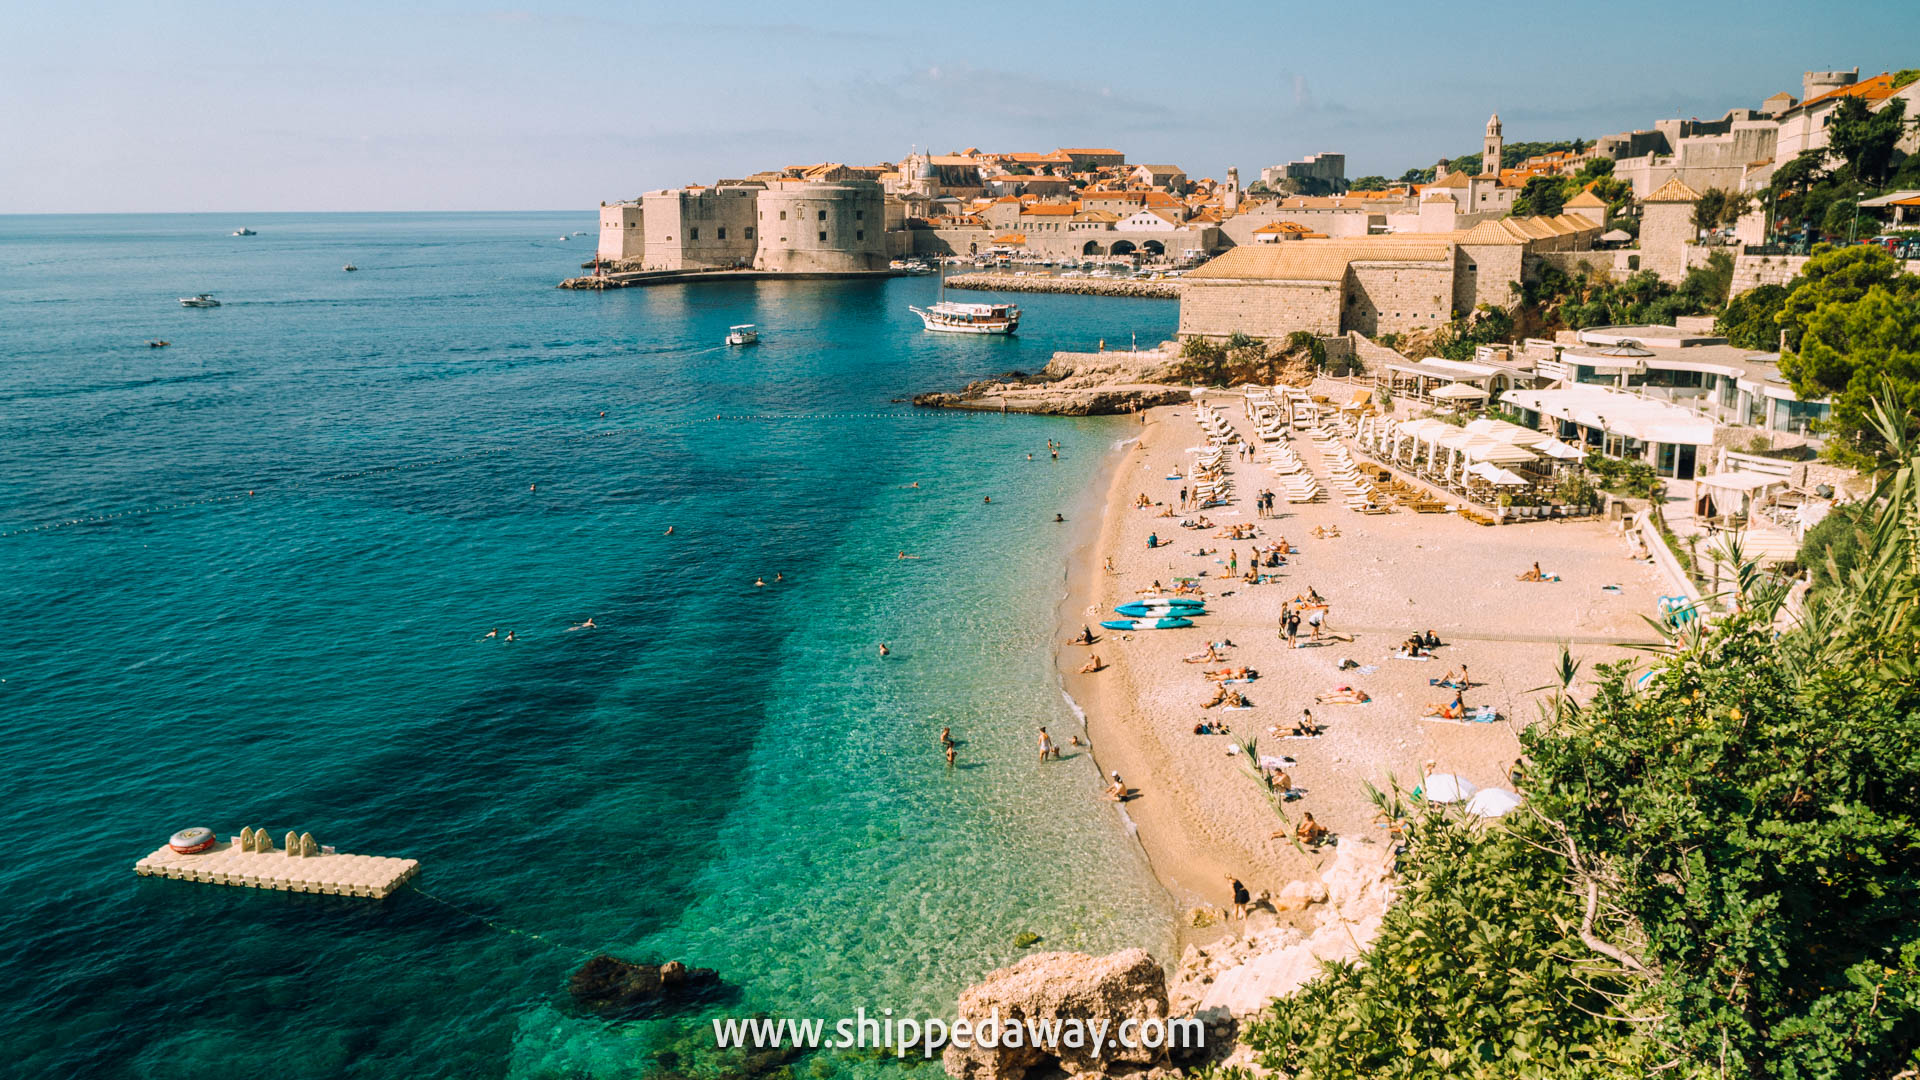 Best Dubrovnik Beaches - Dubrovnik Beaches - Best Beaches in Dubrovnik - Dubrovnik Beaches Guide - Best Beaches in Dubrovnik as recommended by a local - Banje Beach